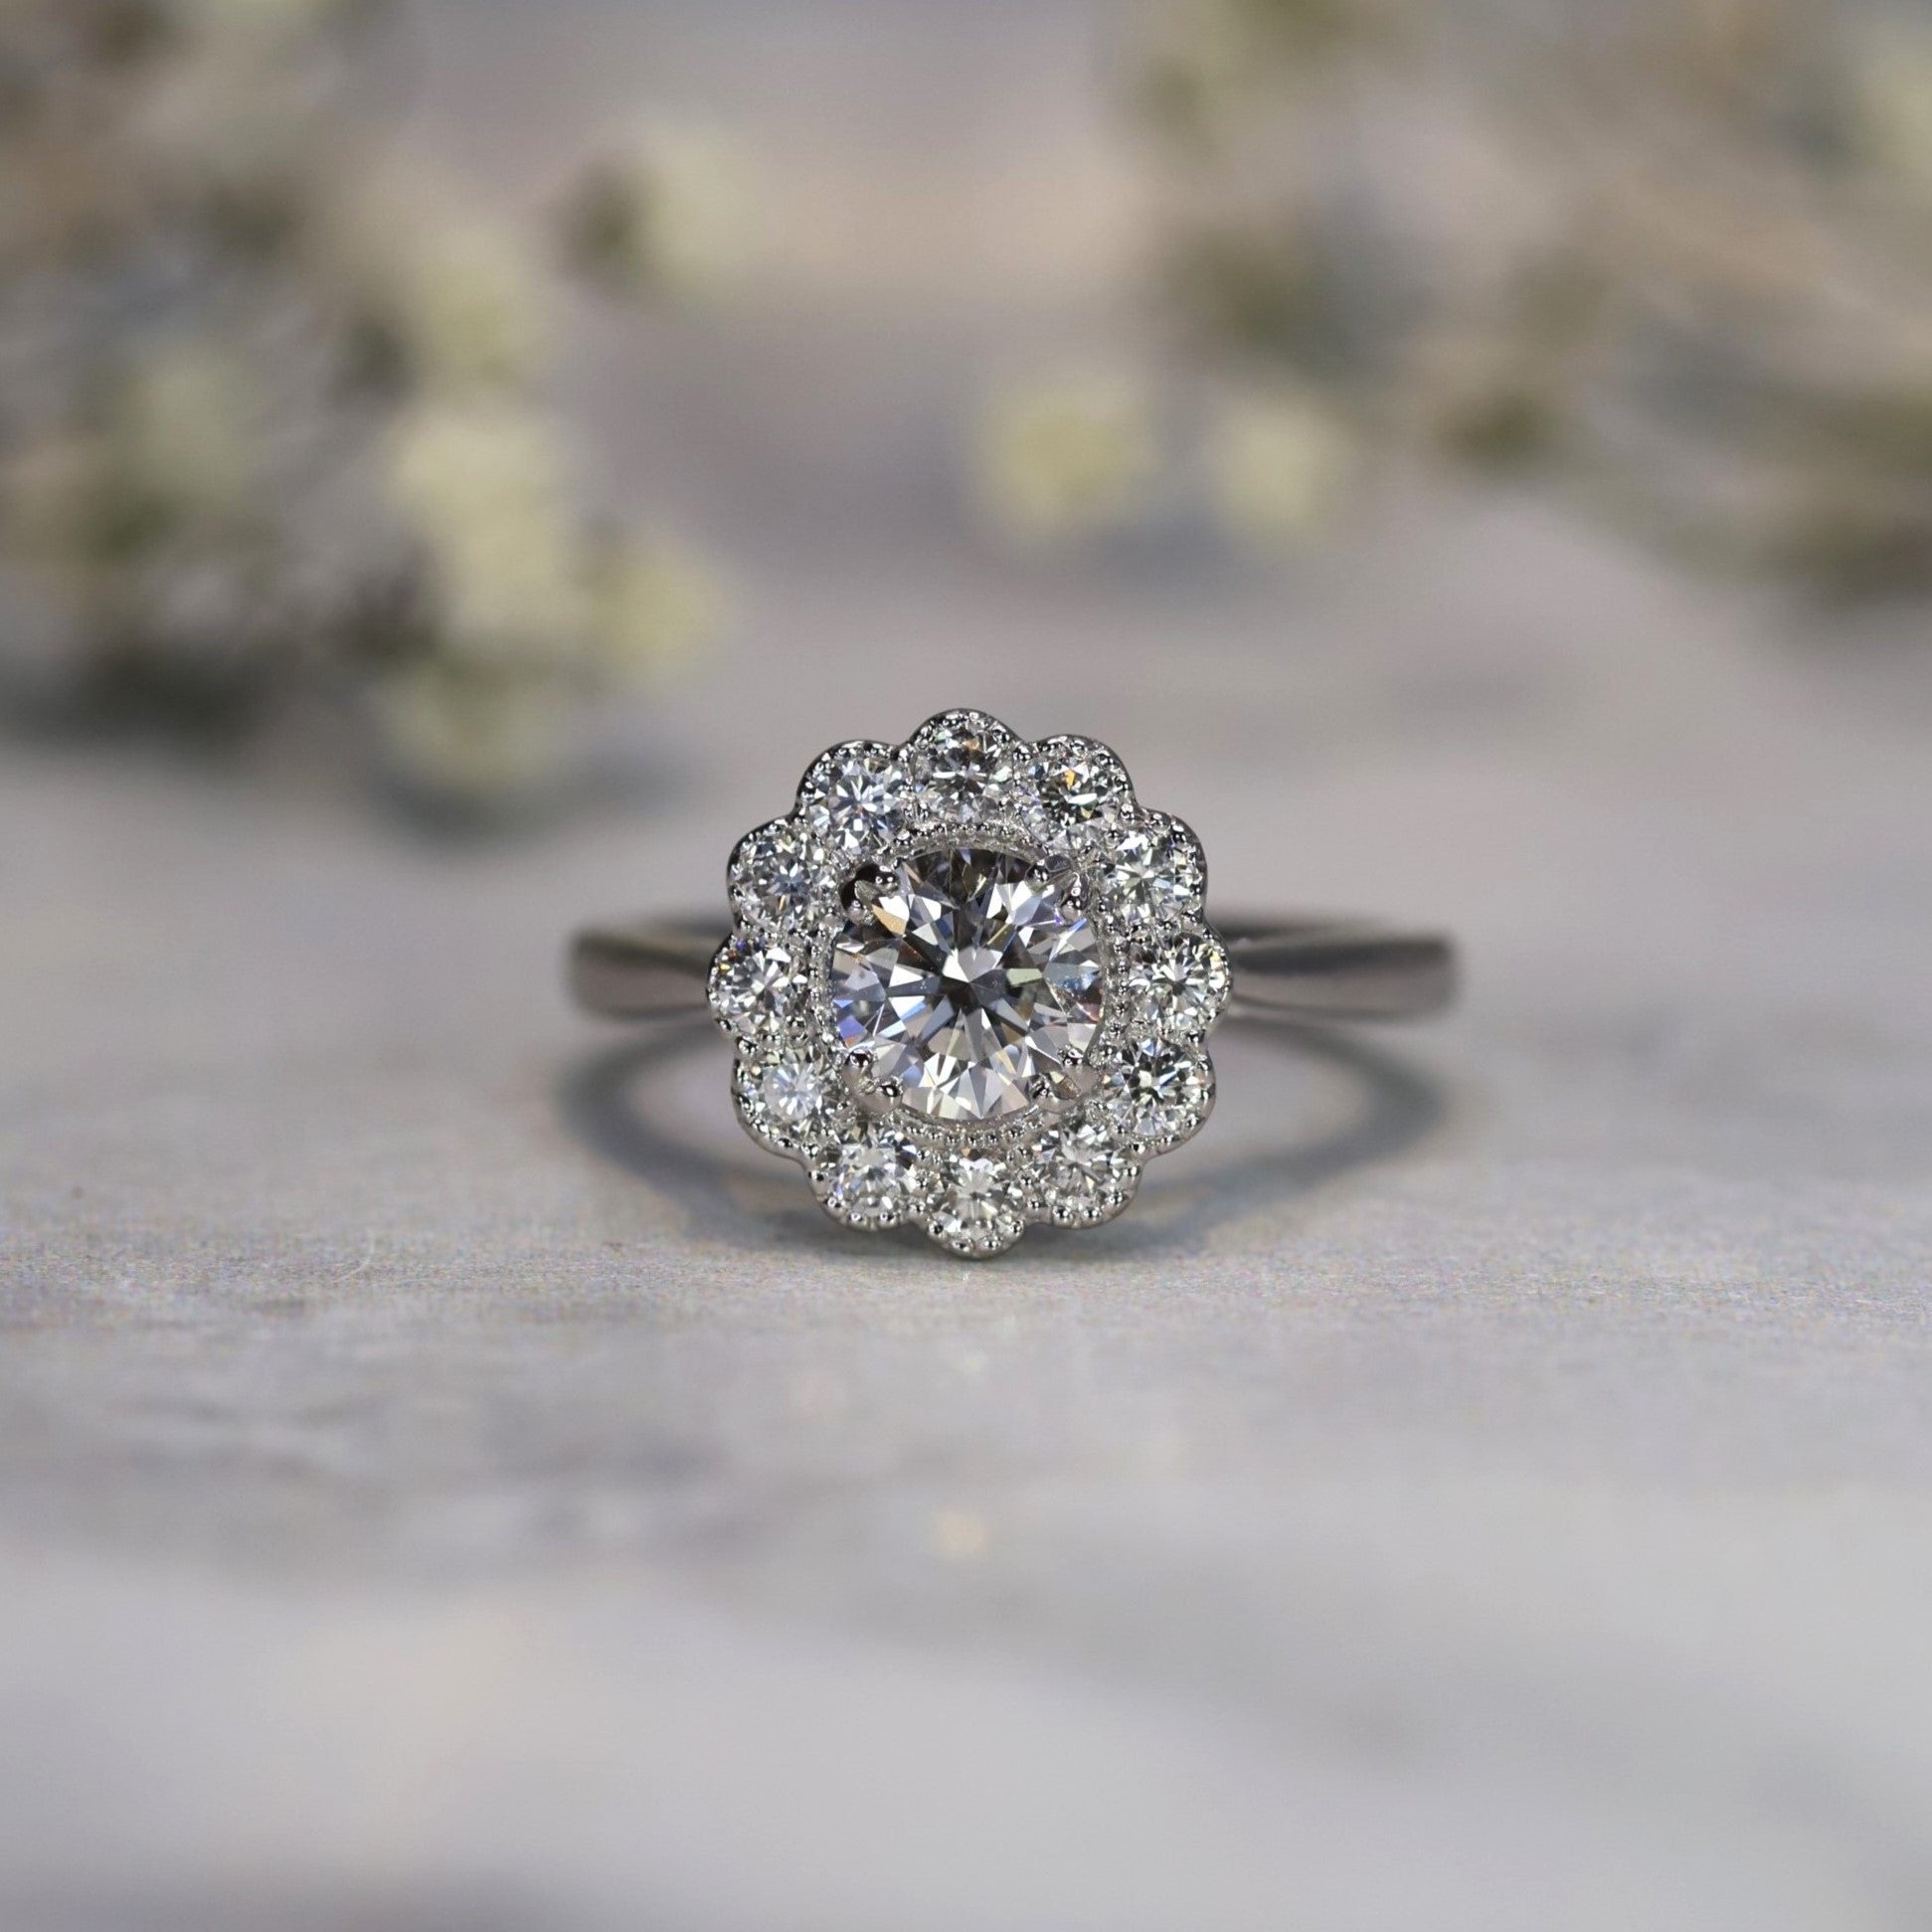 Where to Buy Fake Engagement Rings – Loyes Diamonds